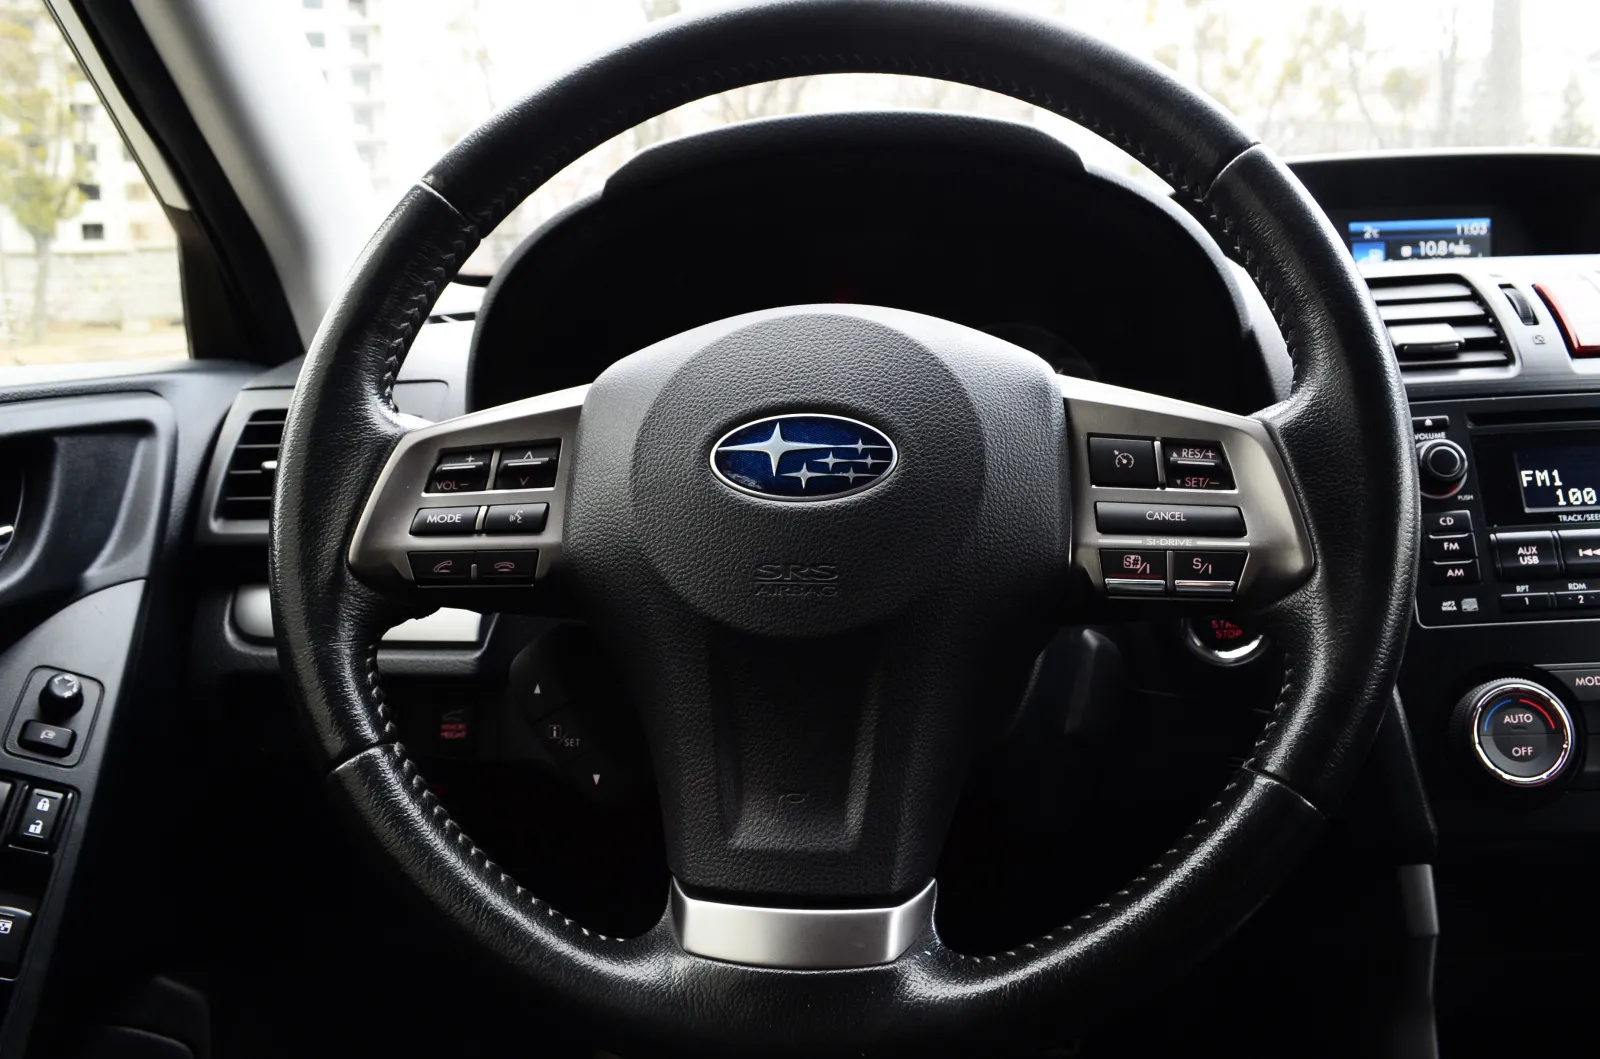 Subaru Forester 2013 купити авто в лізинг